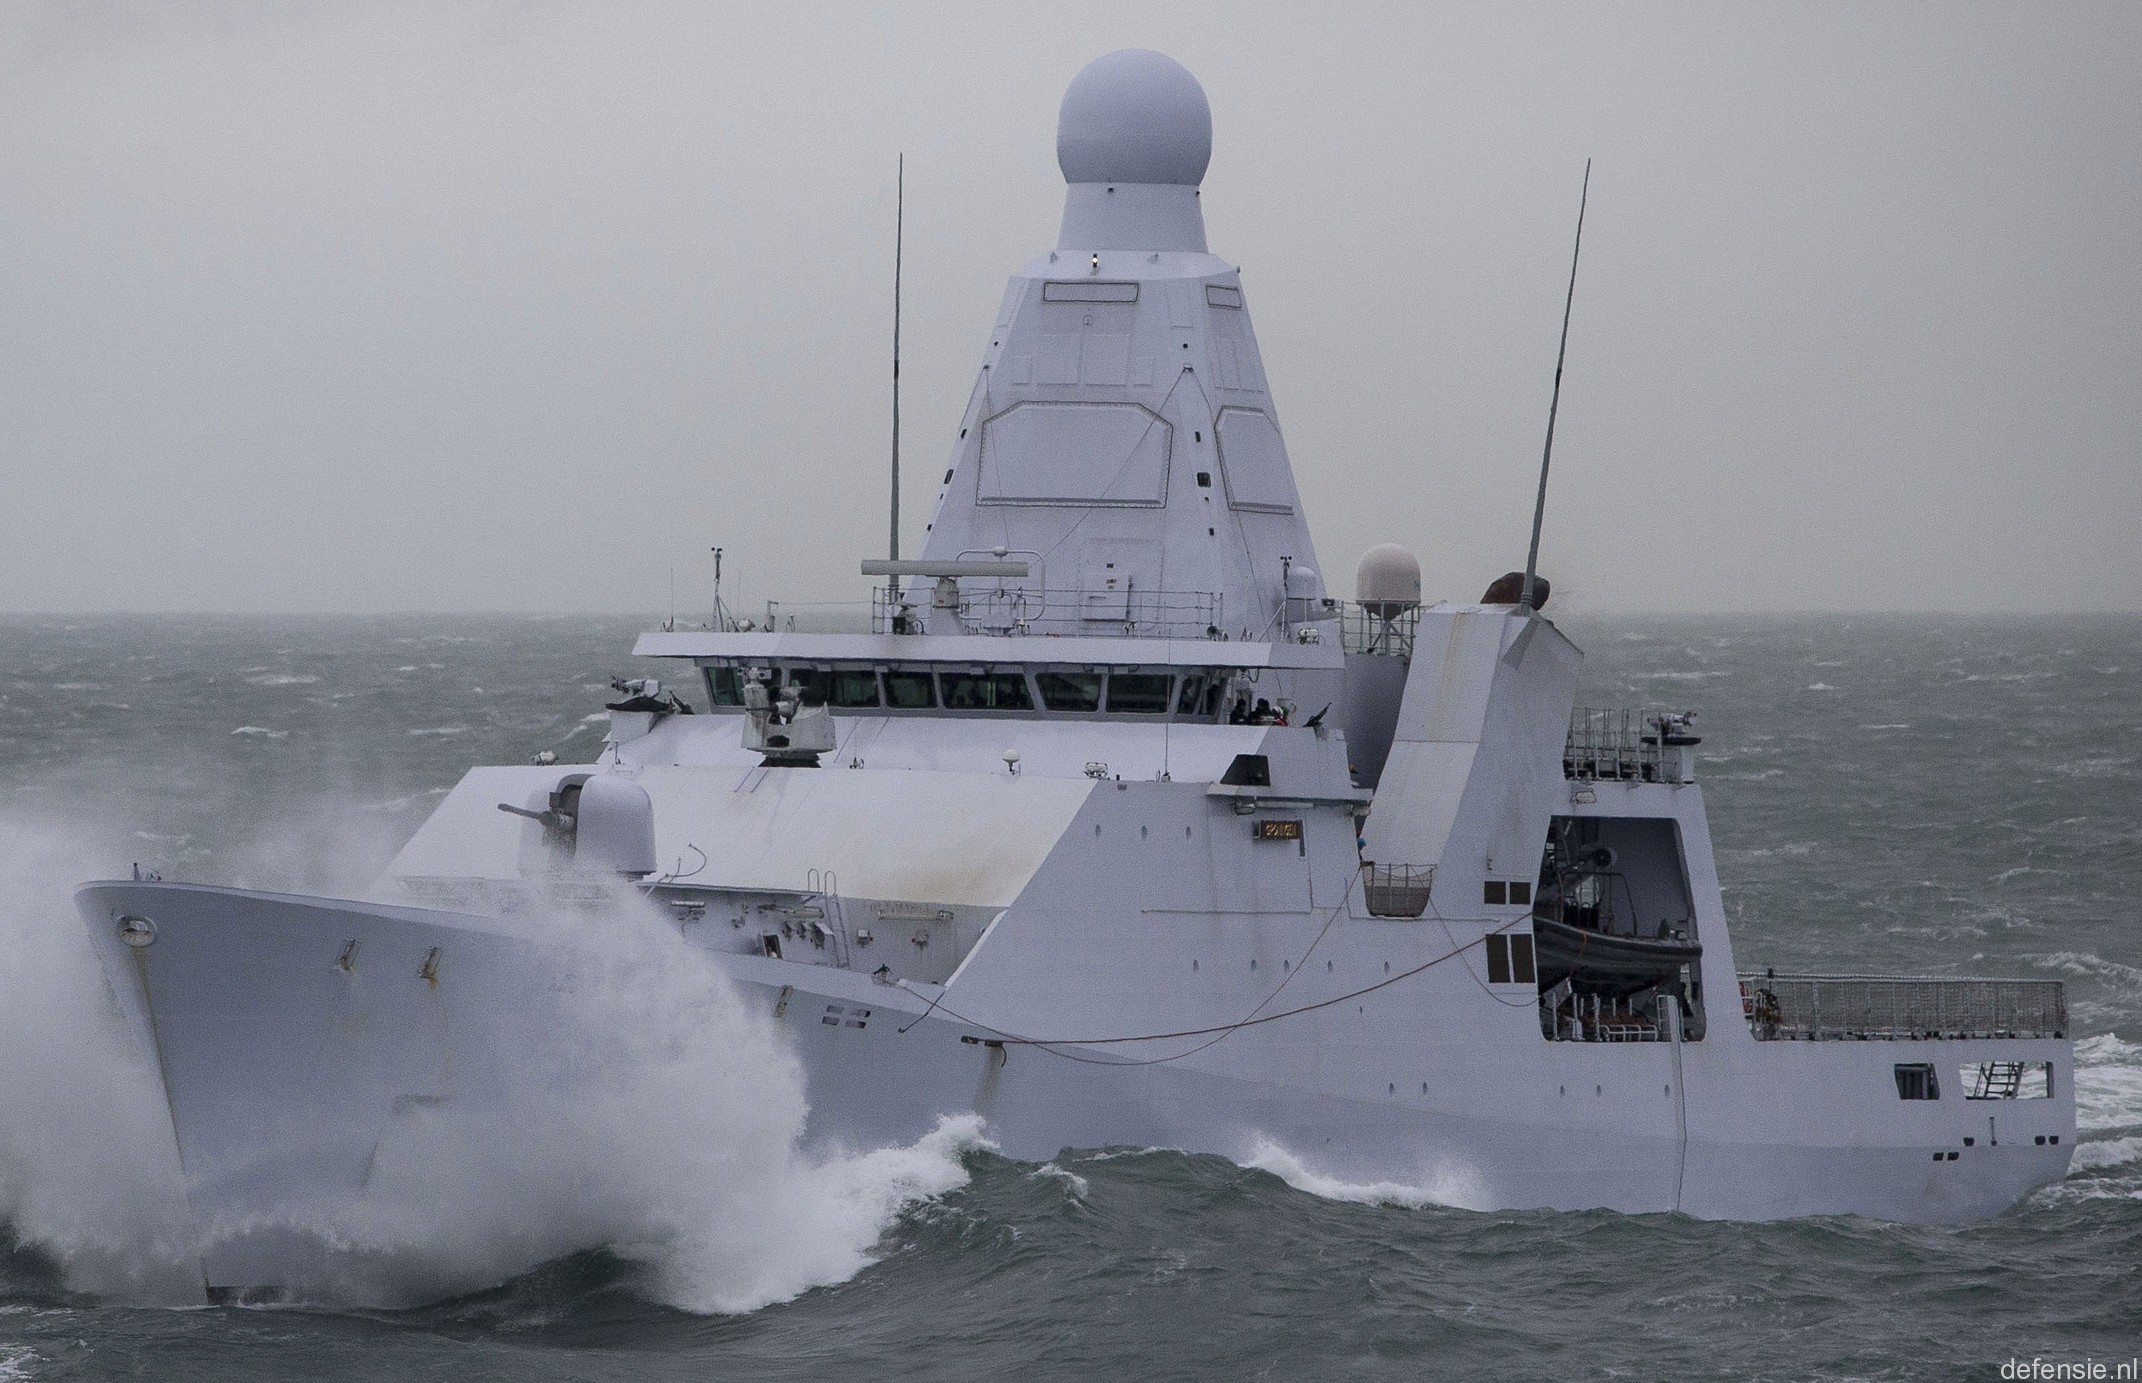 p-840 hnlms holland offshore patrol vessel opv royal netherlands navy 24